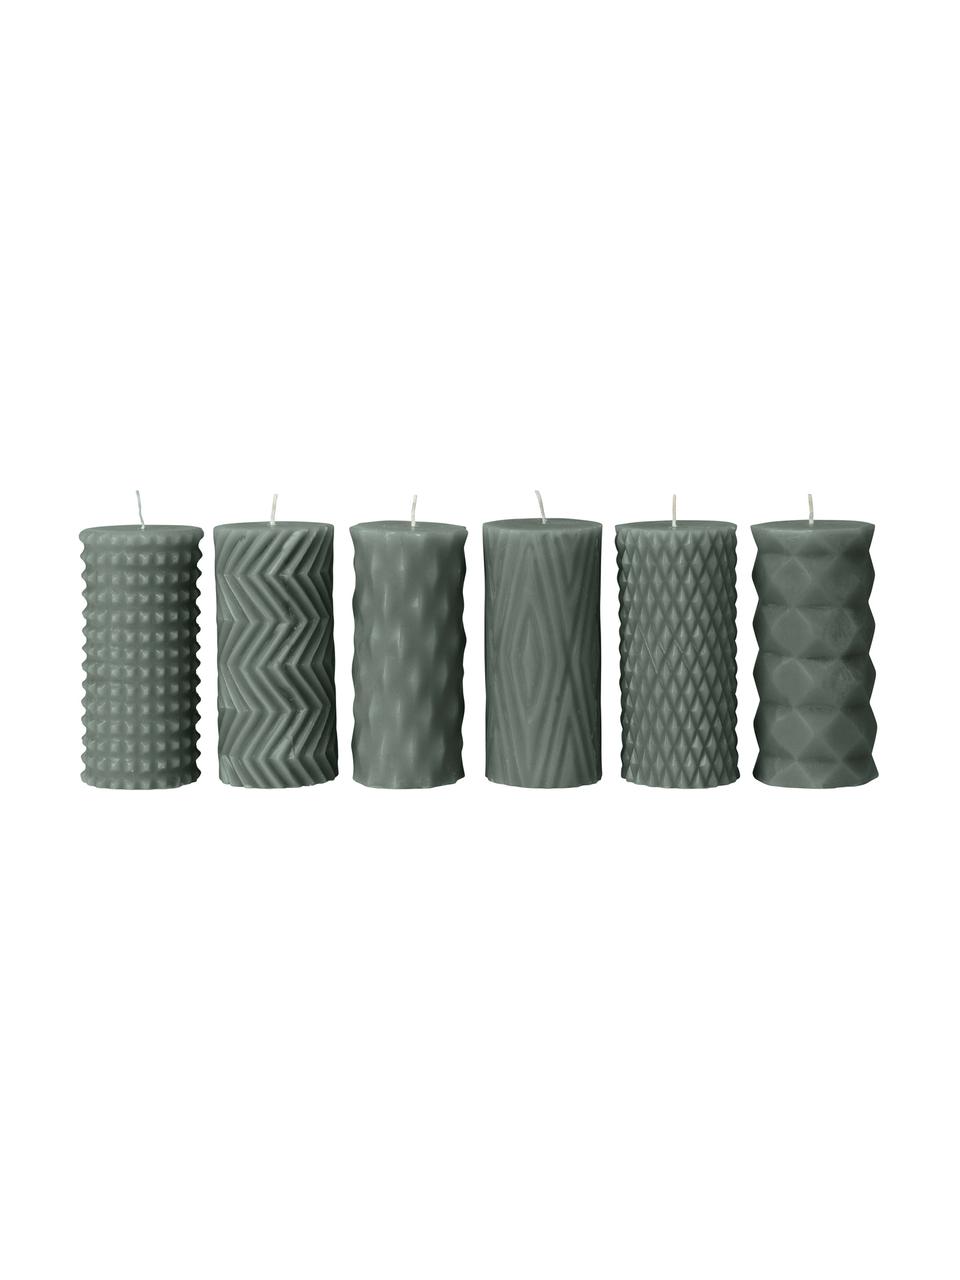 Stumpenkerzen-Set Mix Rhomb, 6-tlg., 95% Paraffin, 5% Sojawachs, Thymiangrün, Ø 7 x H 14 cm